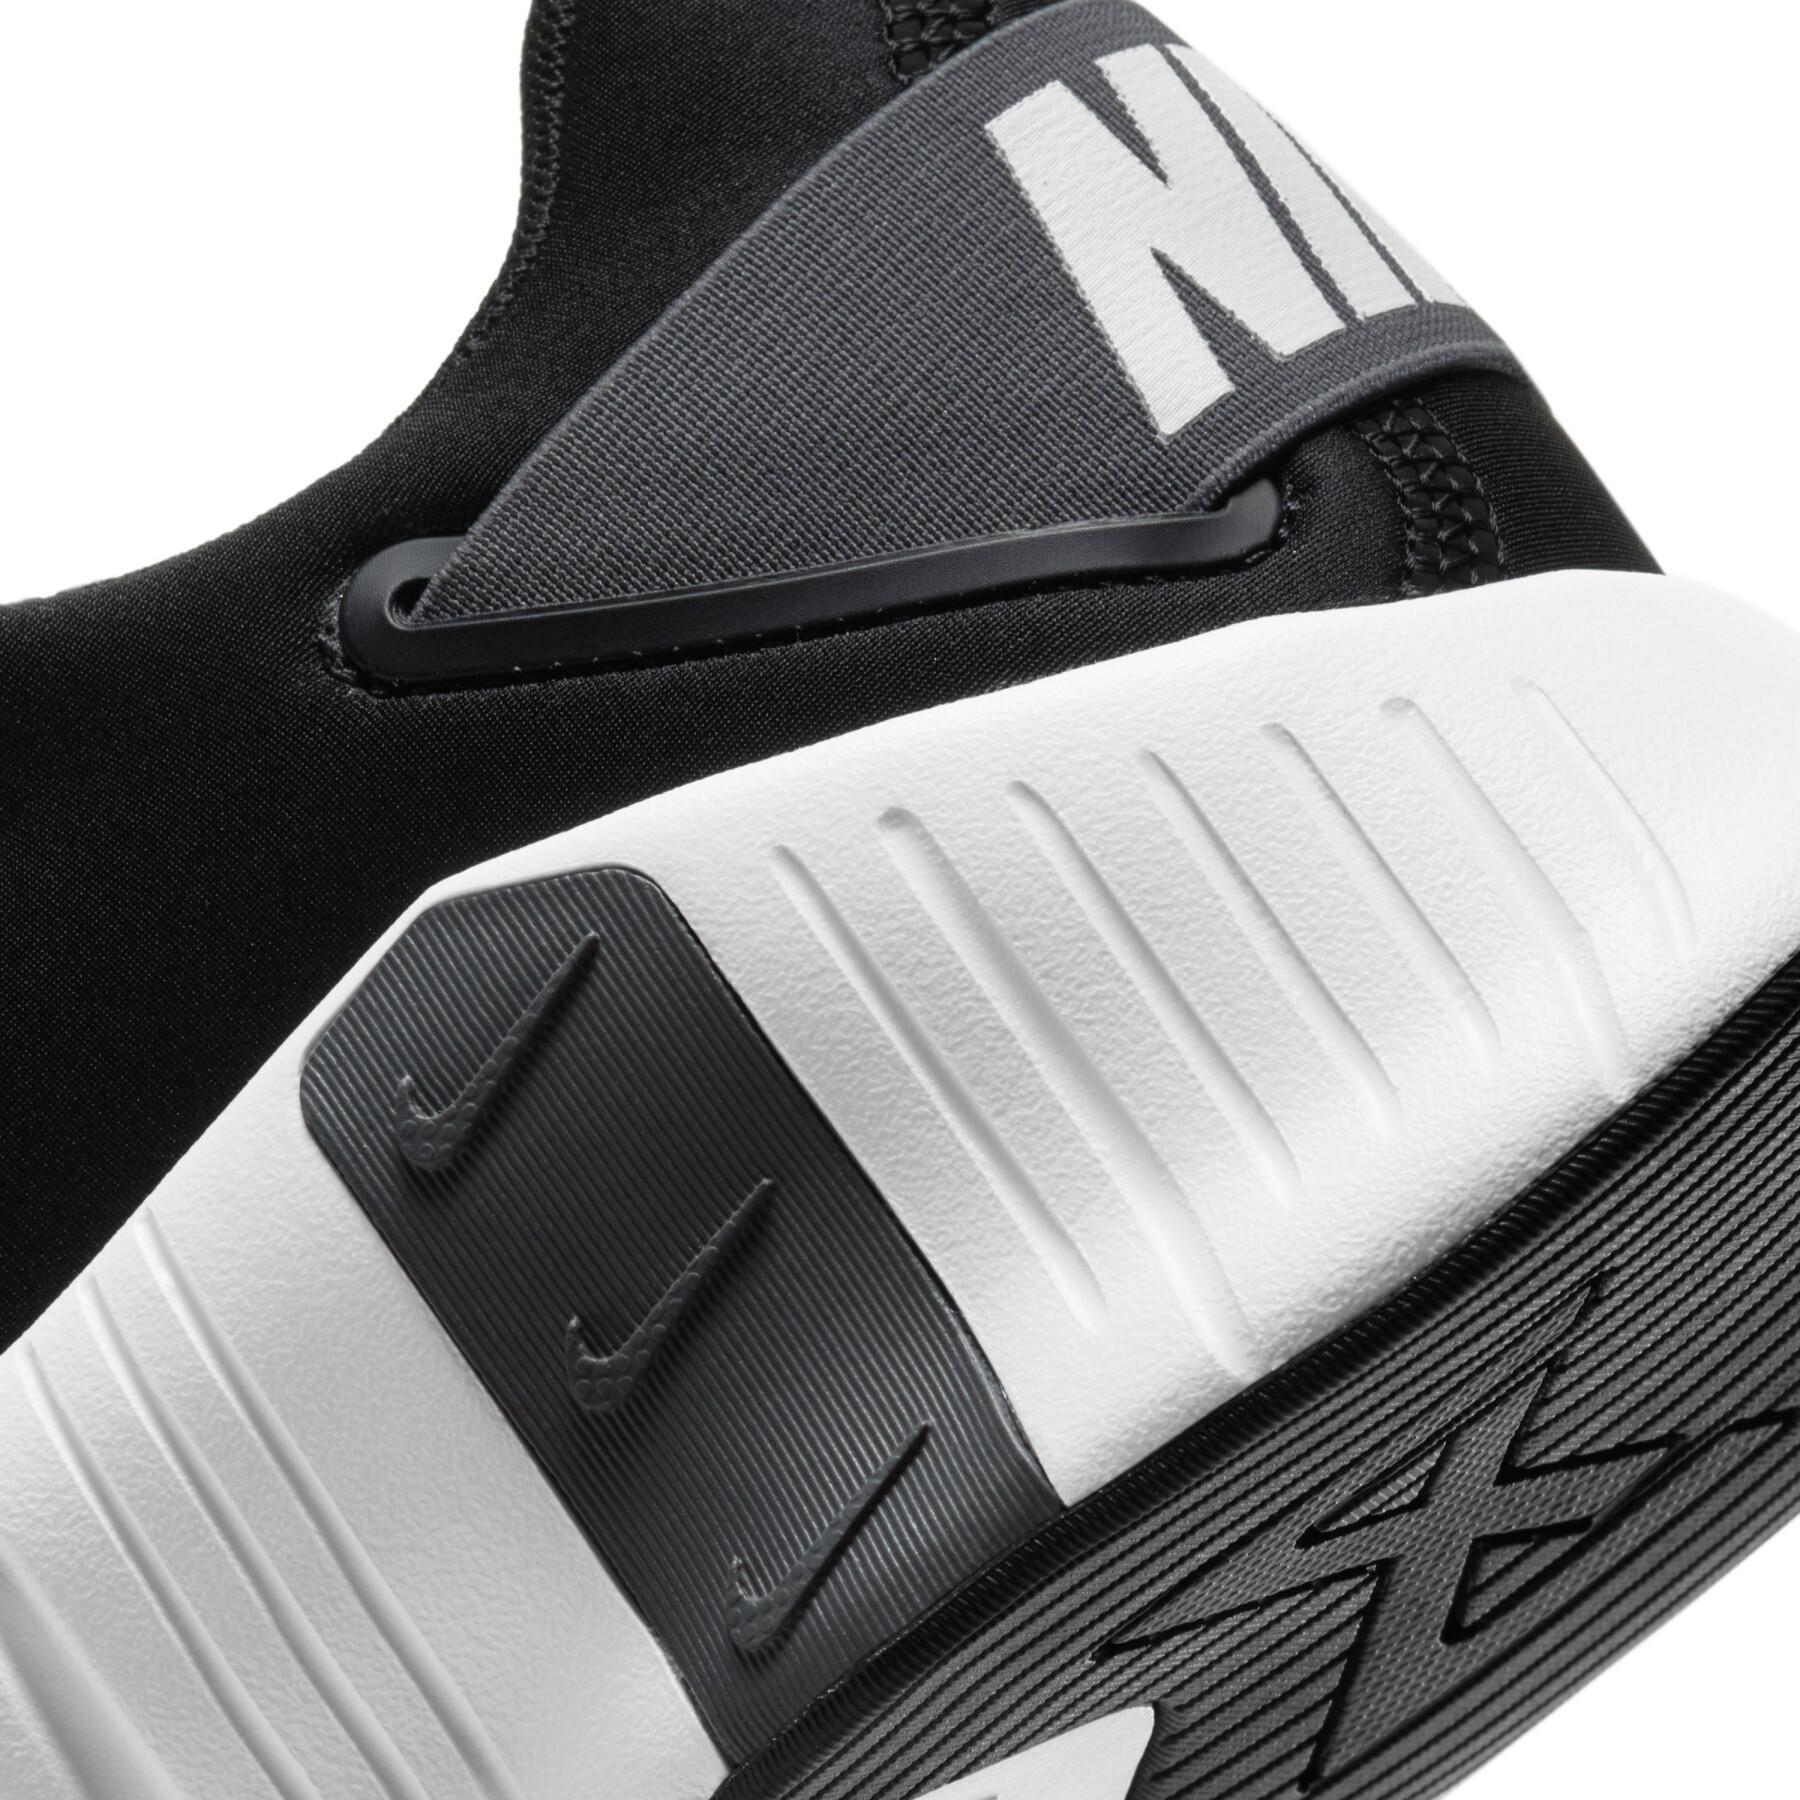 Chaussures de cross training Nike Free Metcon 4